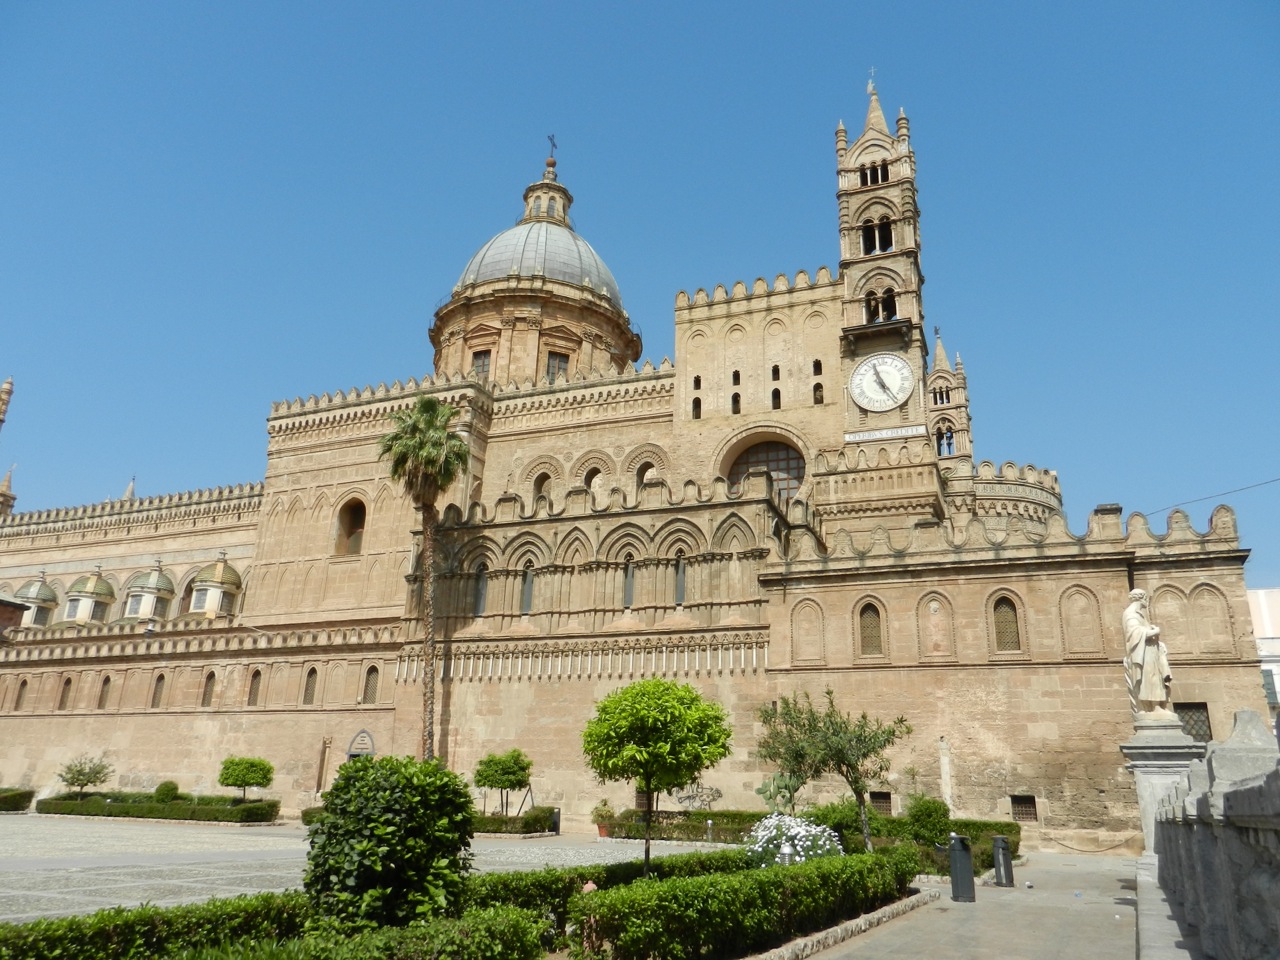 Palermo, Cattedrale